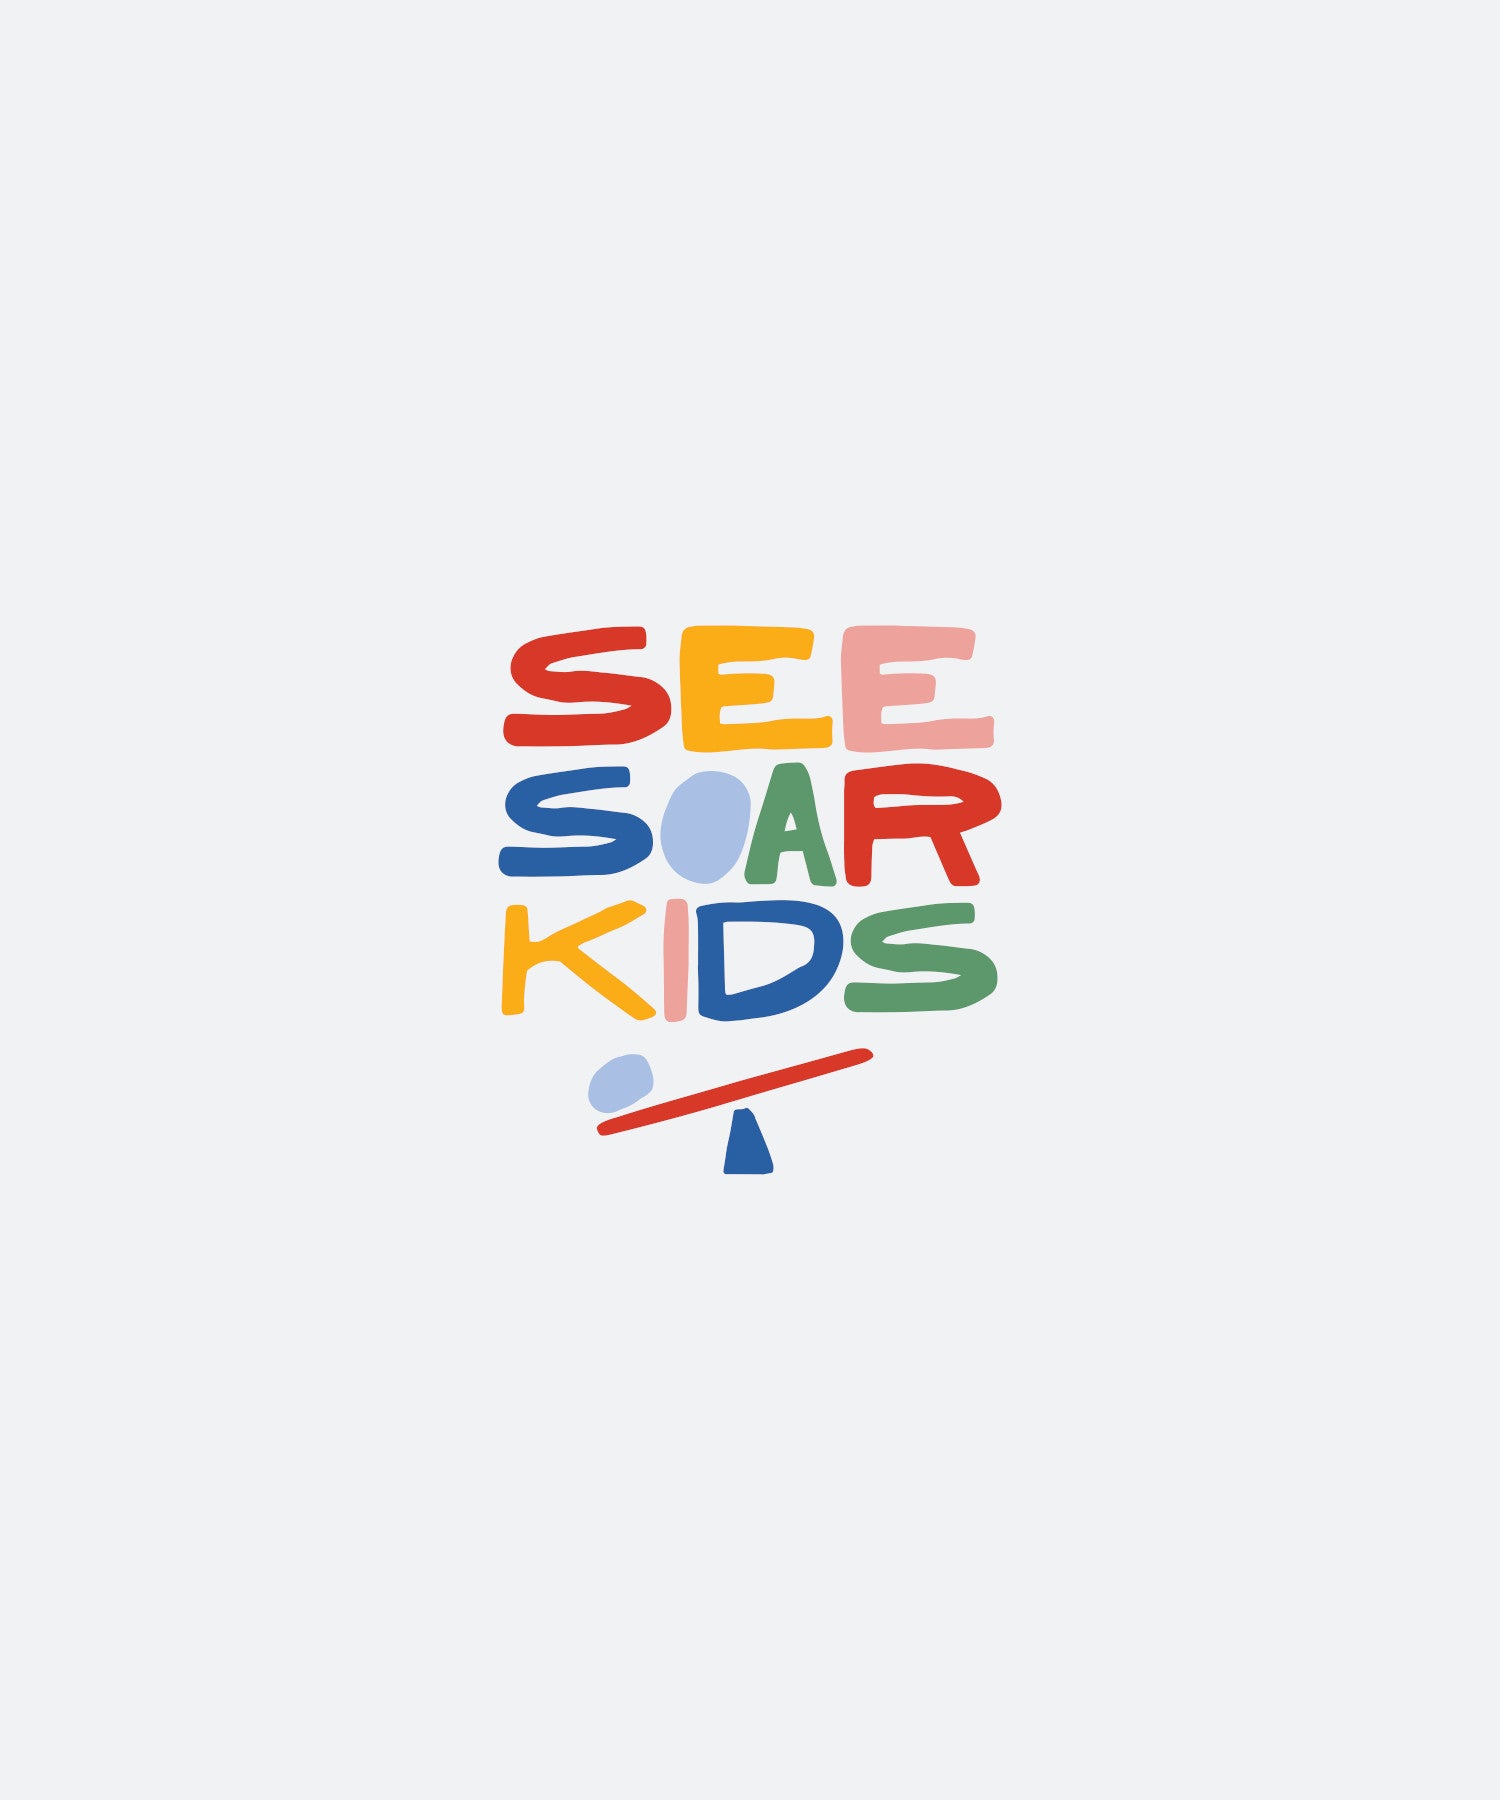 SeeSoar Kids Logo - Inclusive STEM Books & Programs for Kids